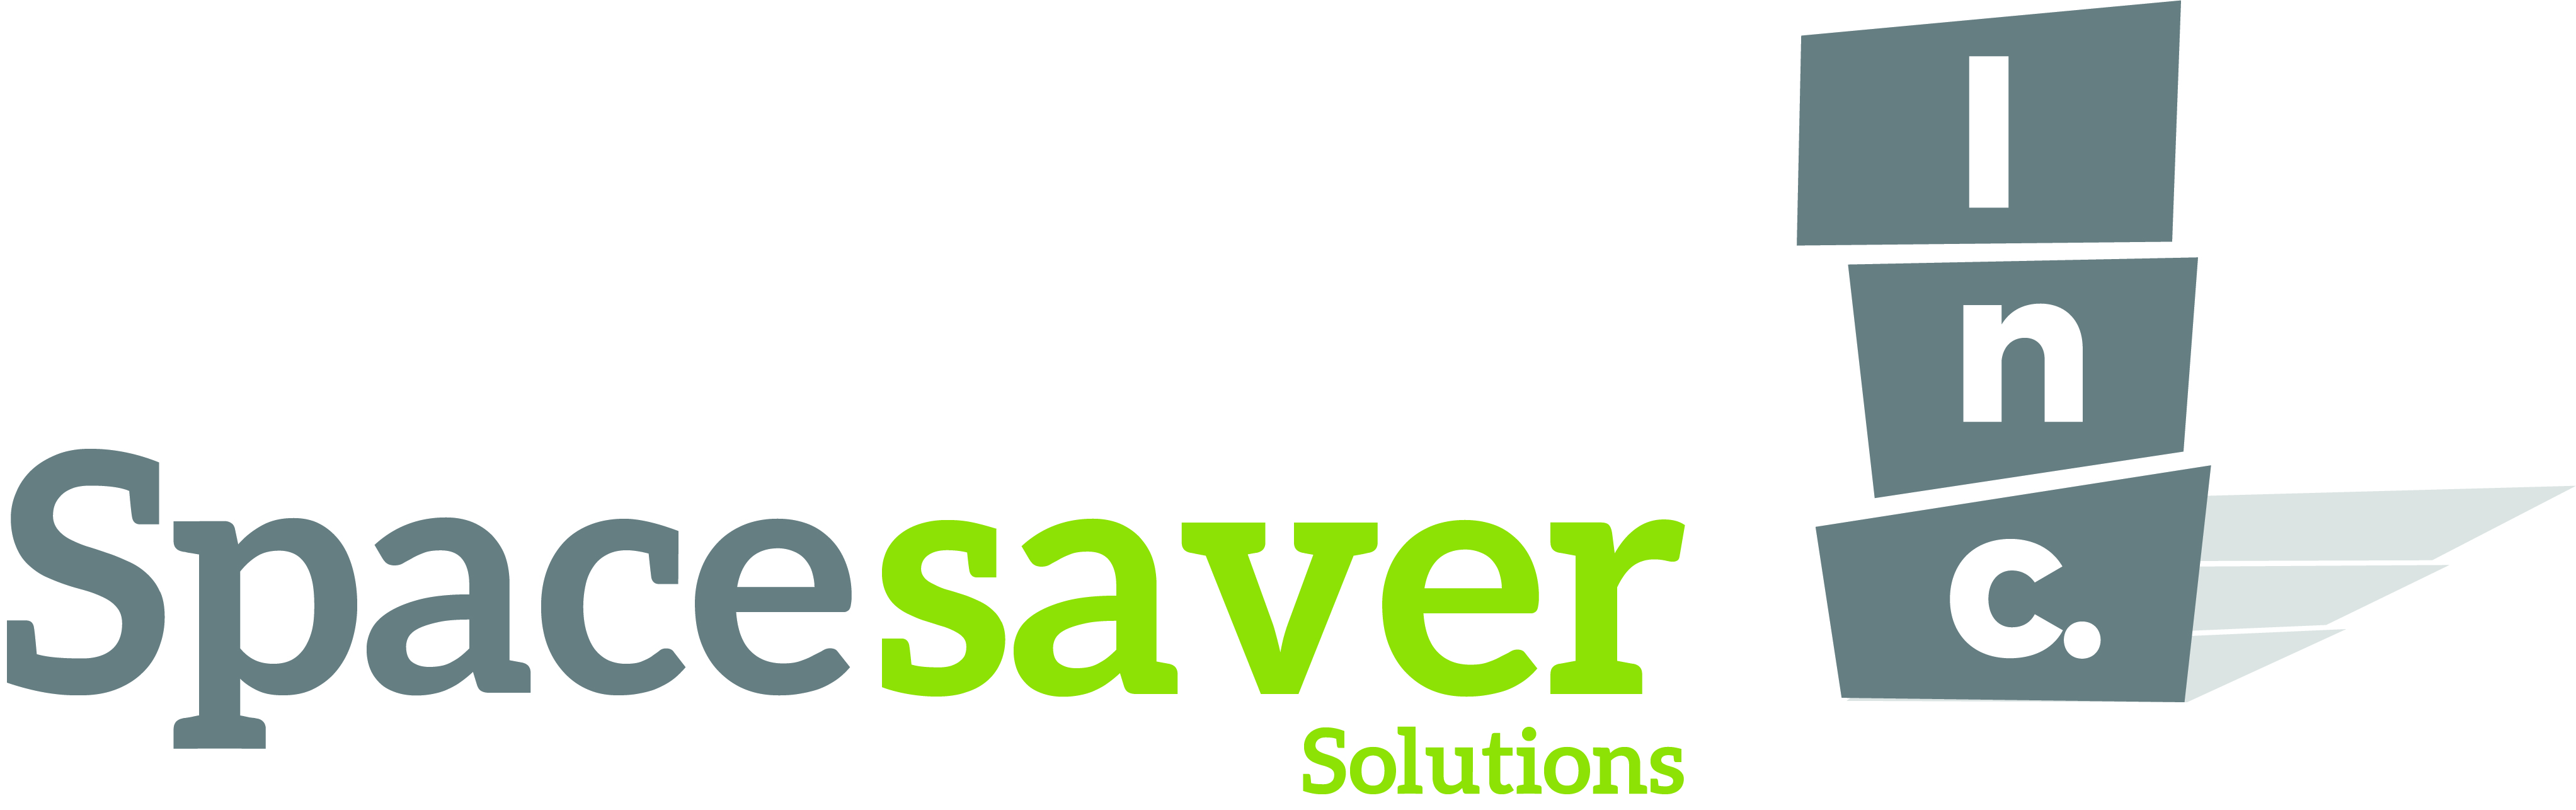 Spacesaver Inc. logo.